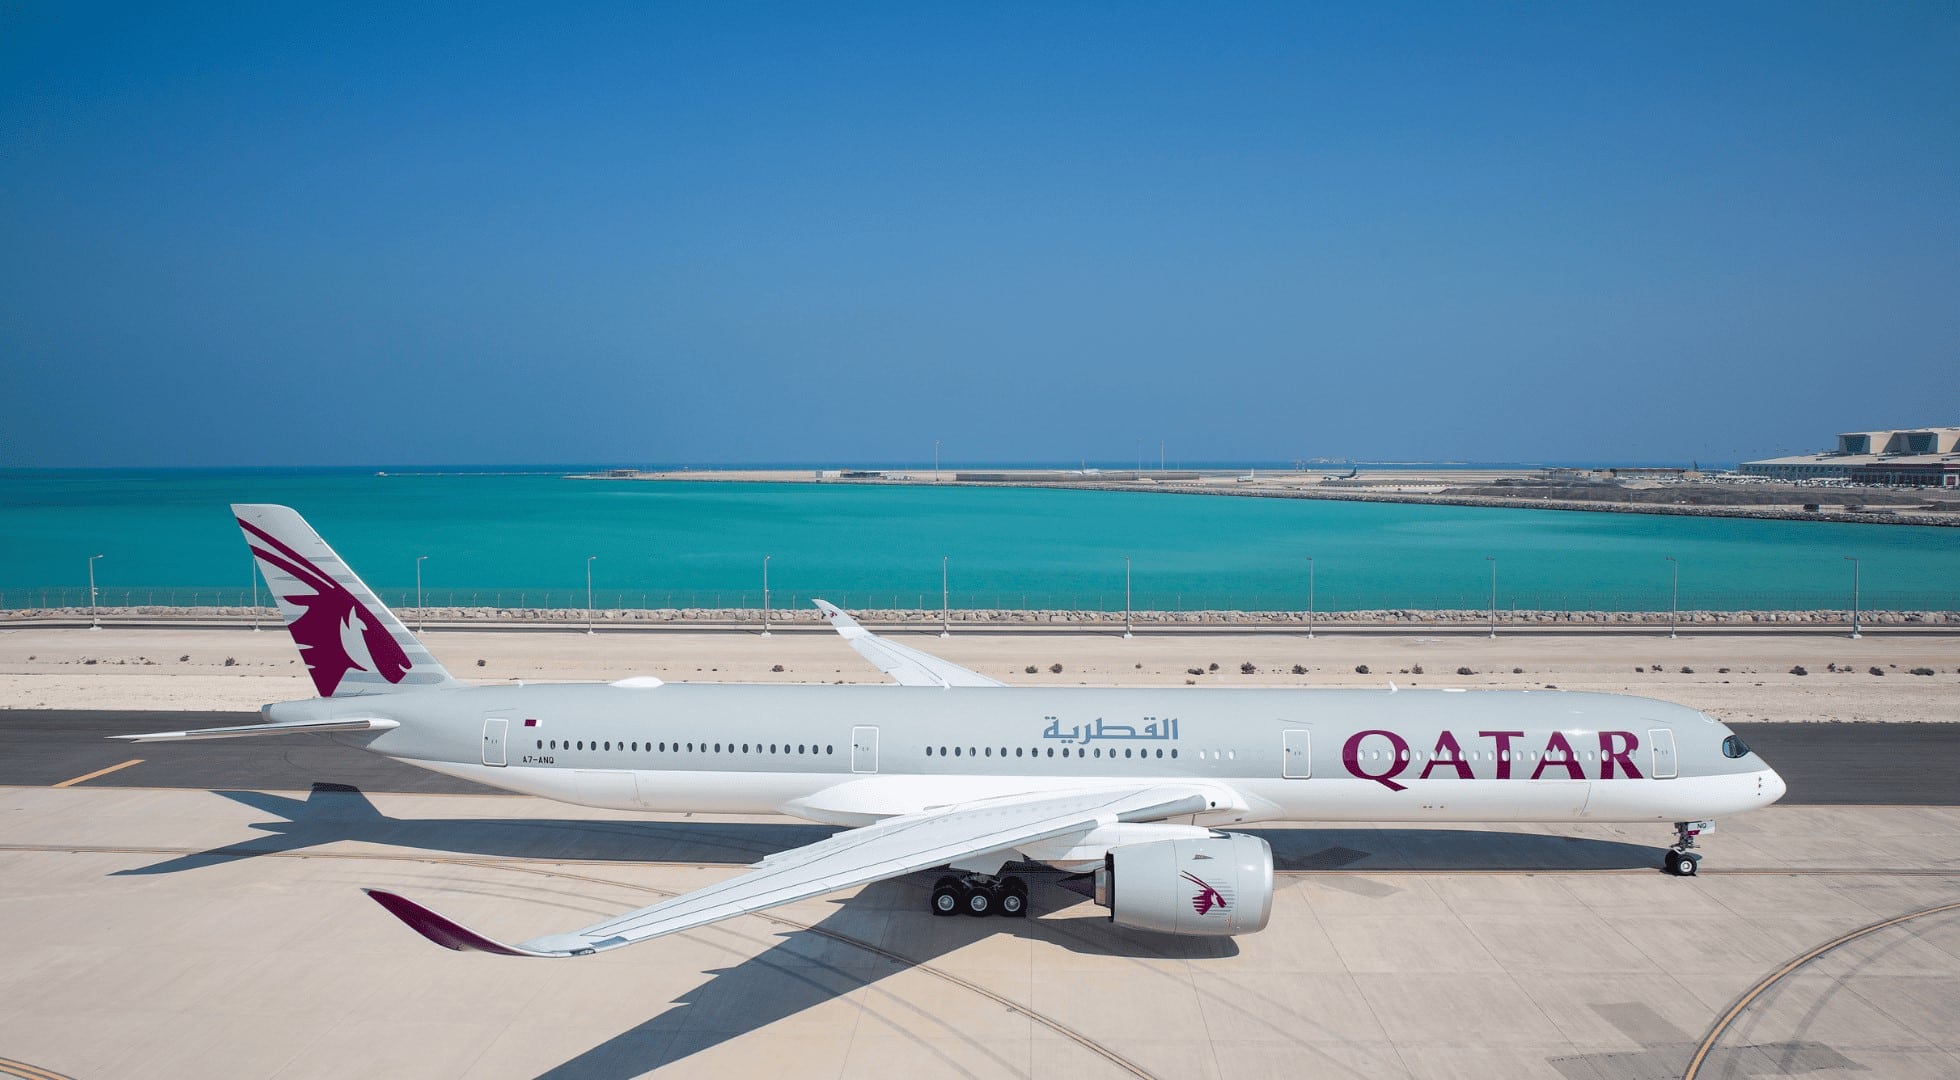 qatar travel tips - qatar airways